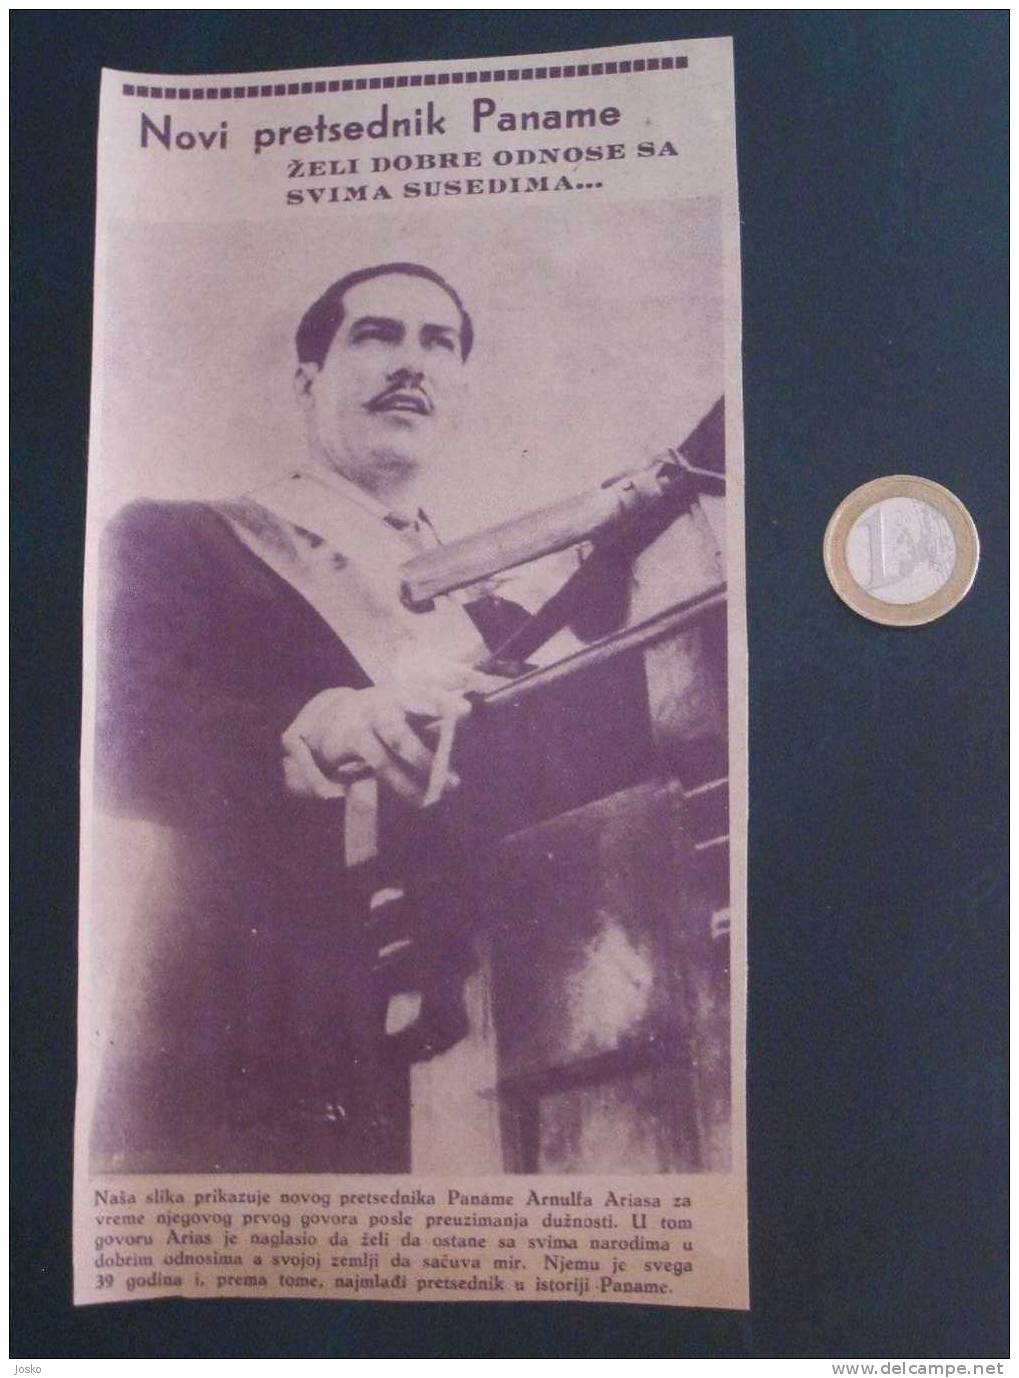 ARNULFO ARIAS New Panama President - Original Newspaper Clipping From \" Panorama \" Newspaper - Yugoslavia 1940. - Advertising